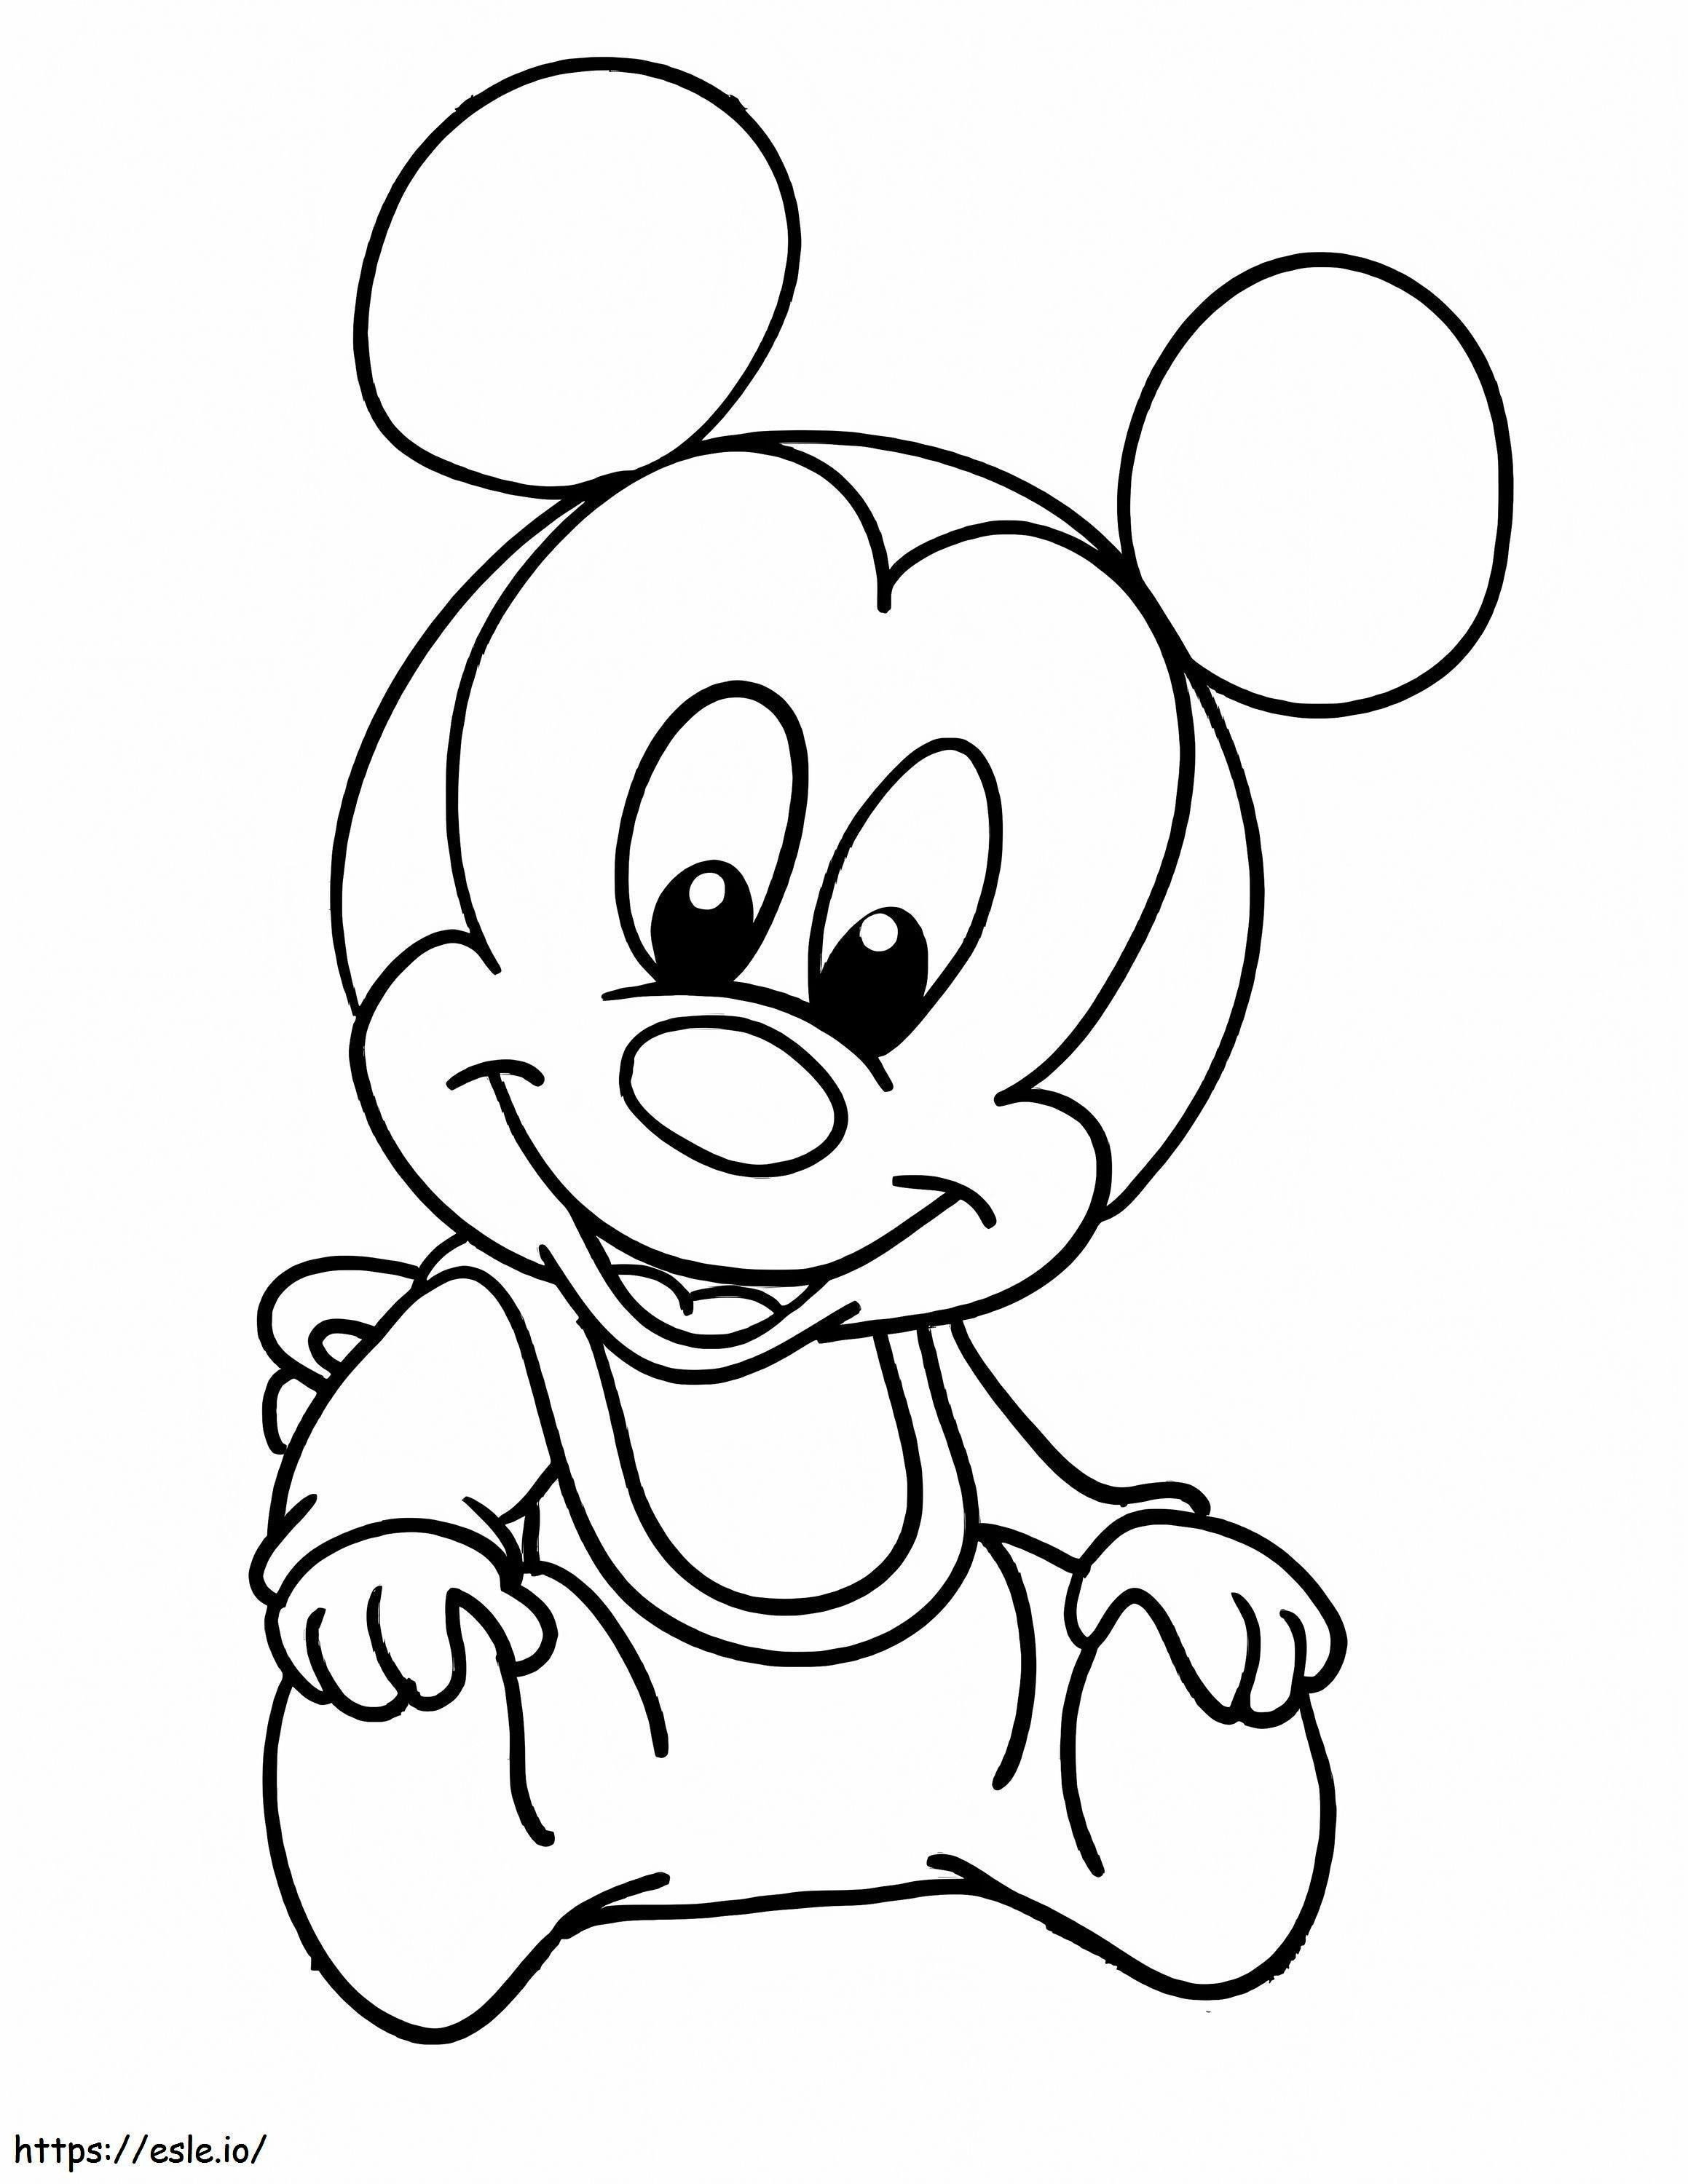 Divertido bebê Mickey Mouse sentado para colorir